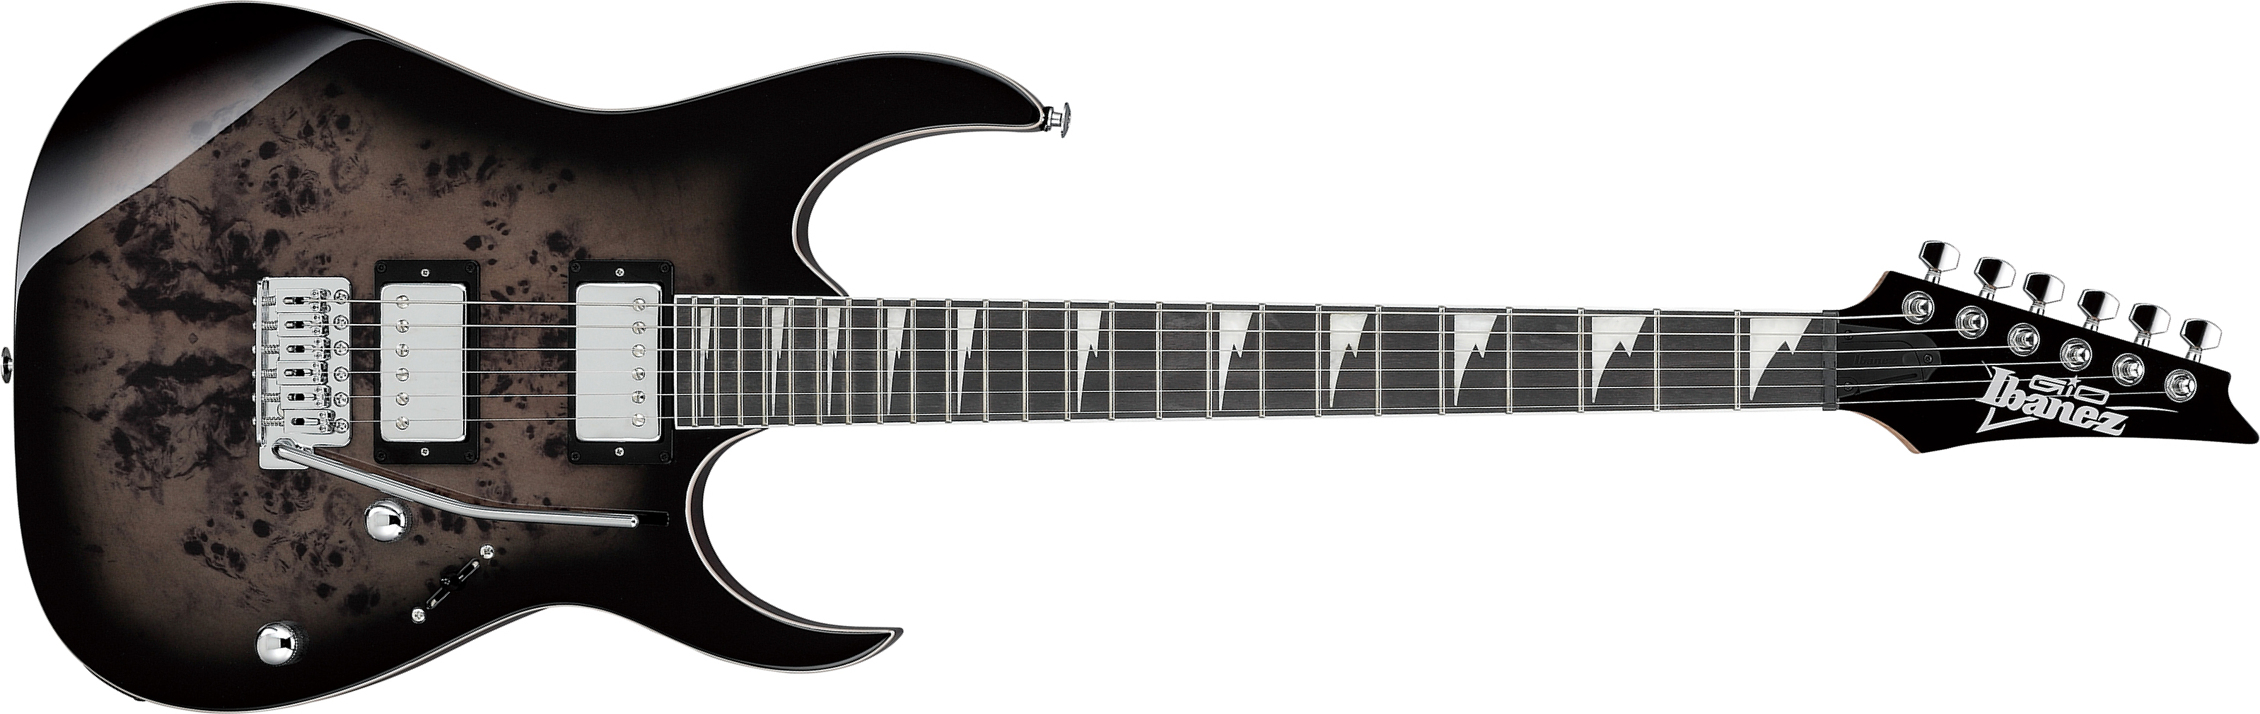 Ibanez Grg220pa1 Bkb Gio 2h Trem Pur - Transparent Brown Black Burst - Elektrische gitaar in Str-vorm - Main picture